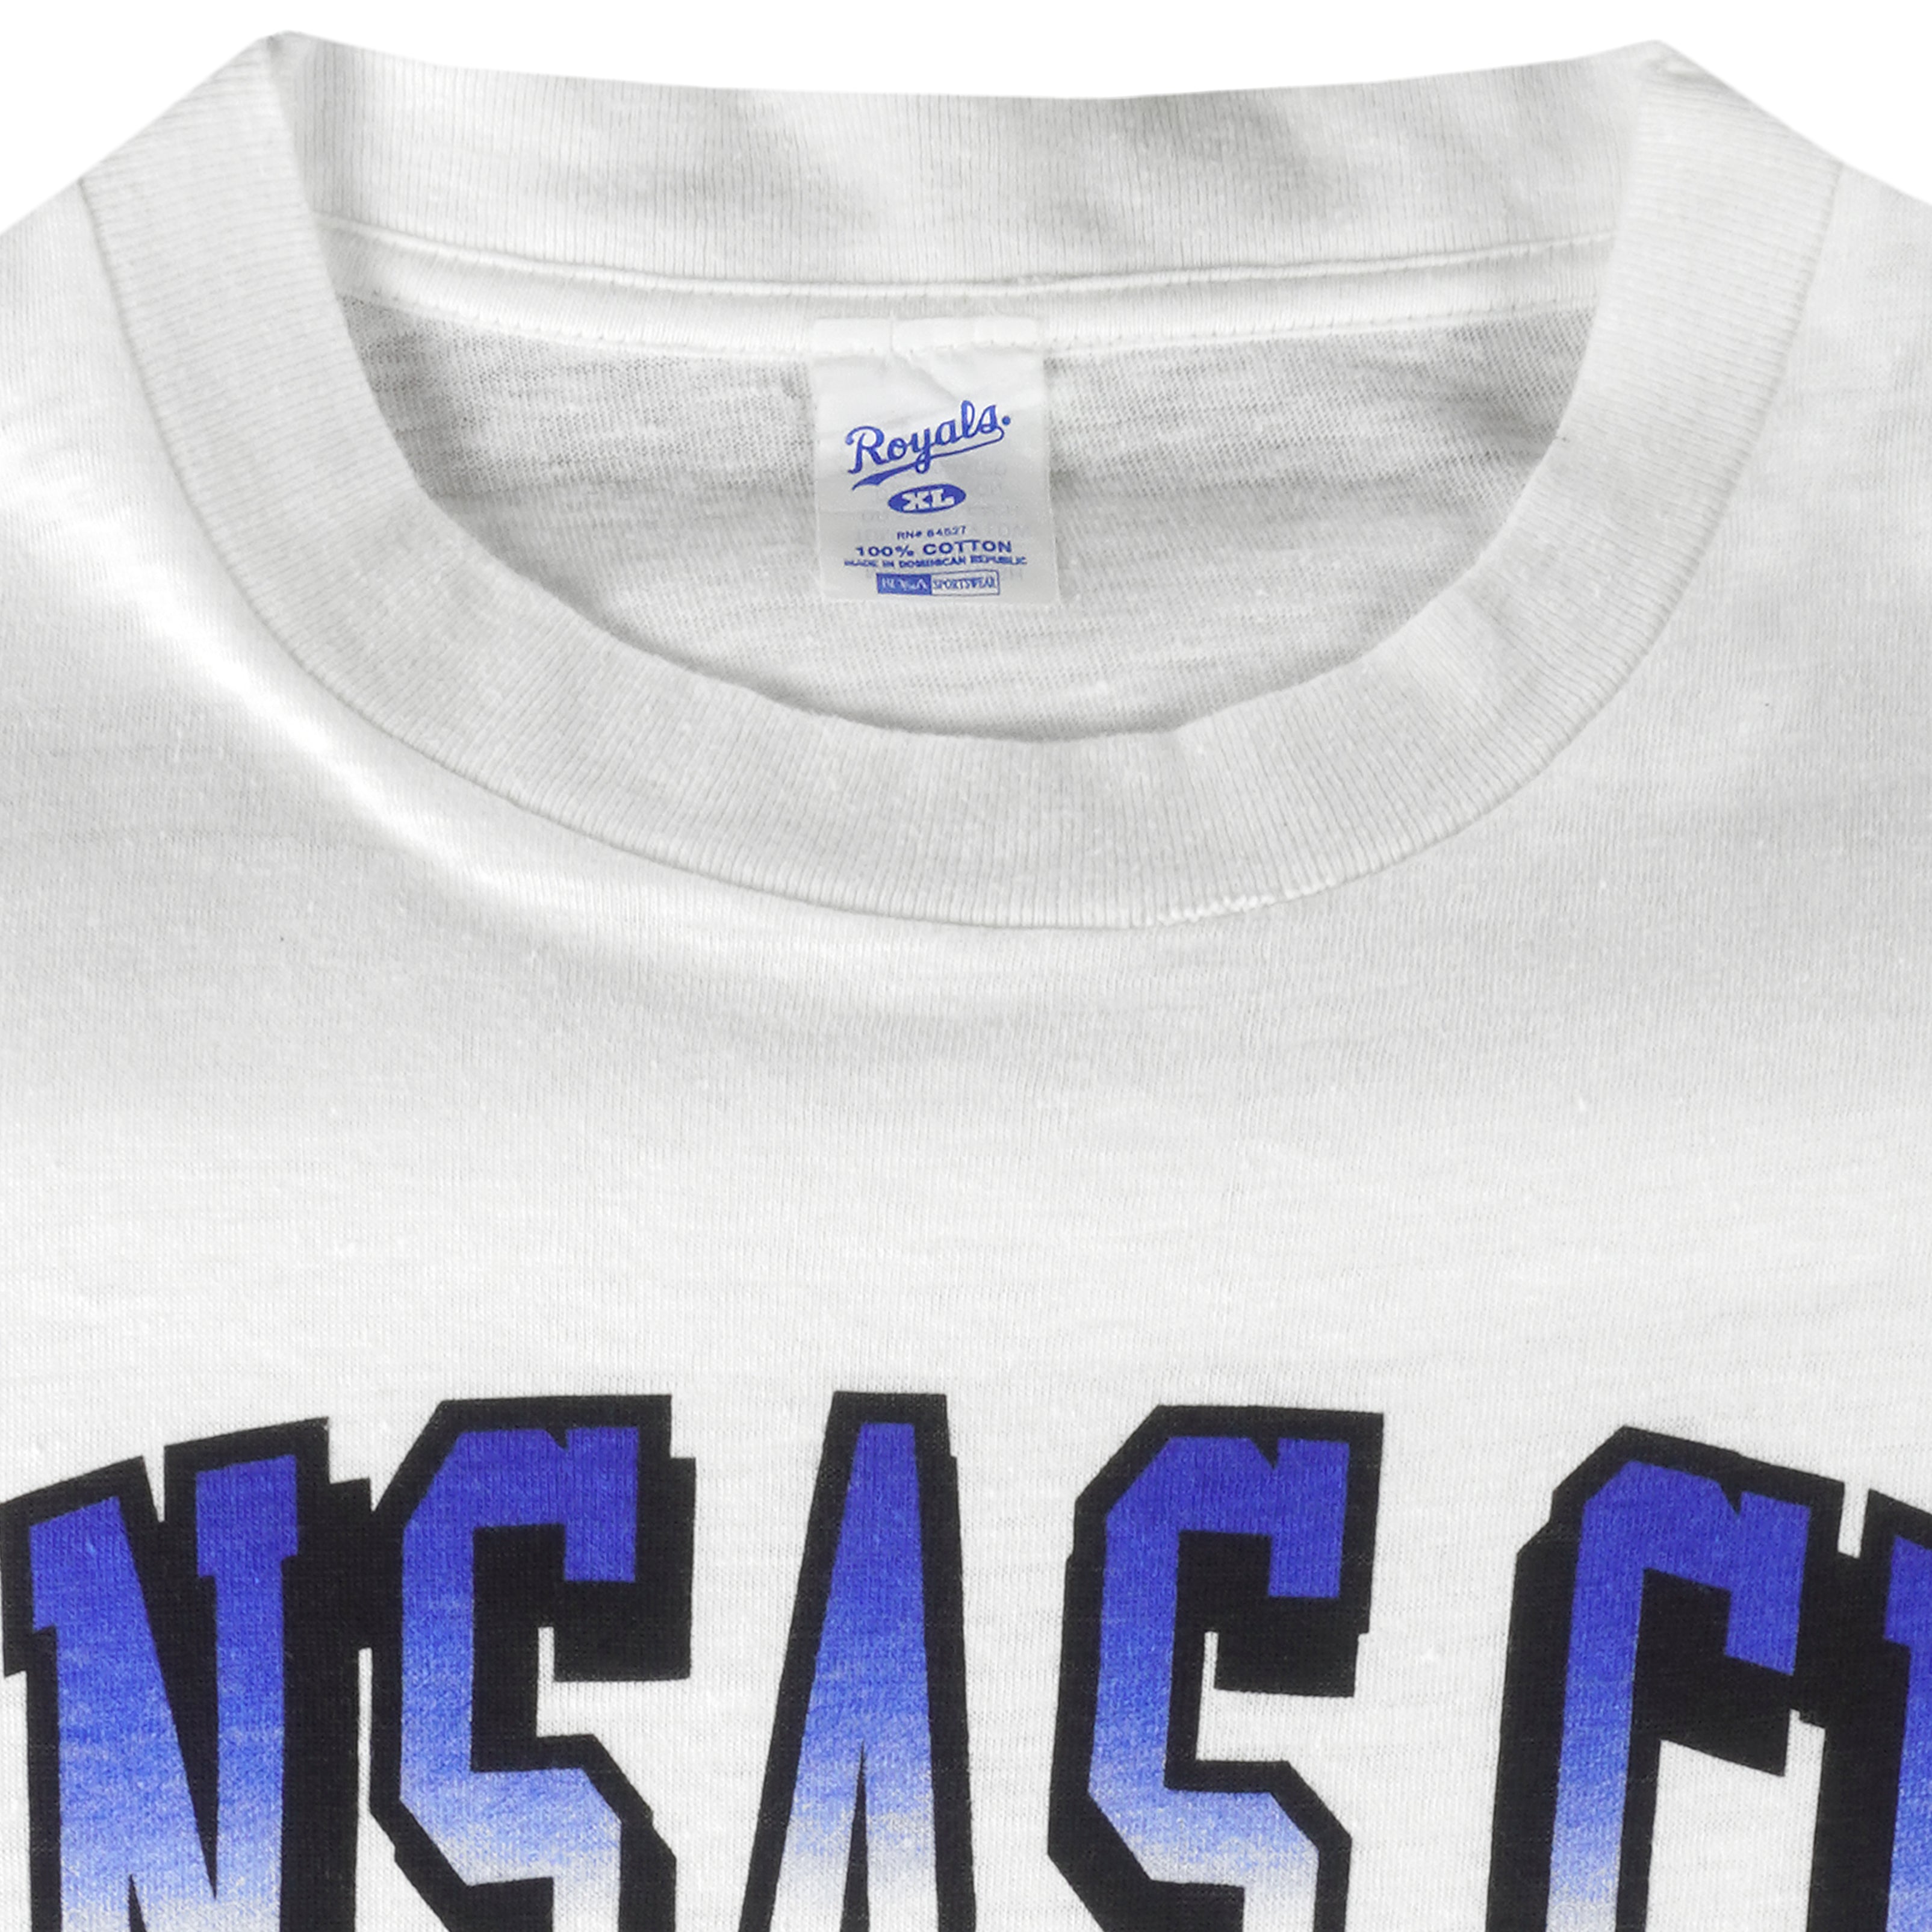 KANSAS CITY ROYALS BASEBALL STARTER SHIRT XL Other Shirts